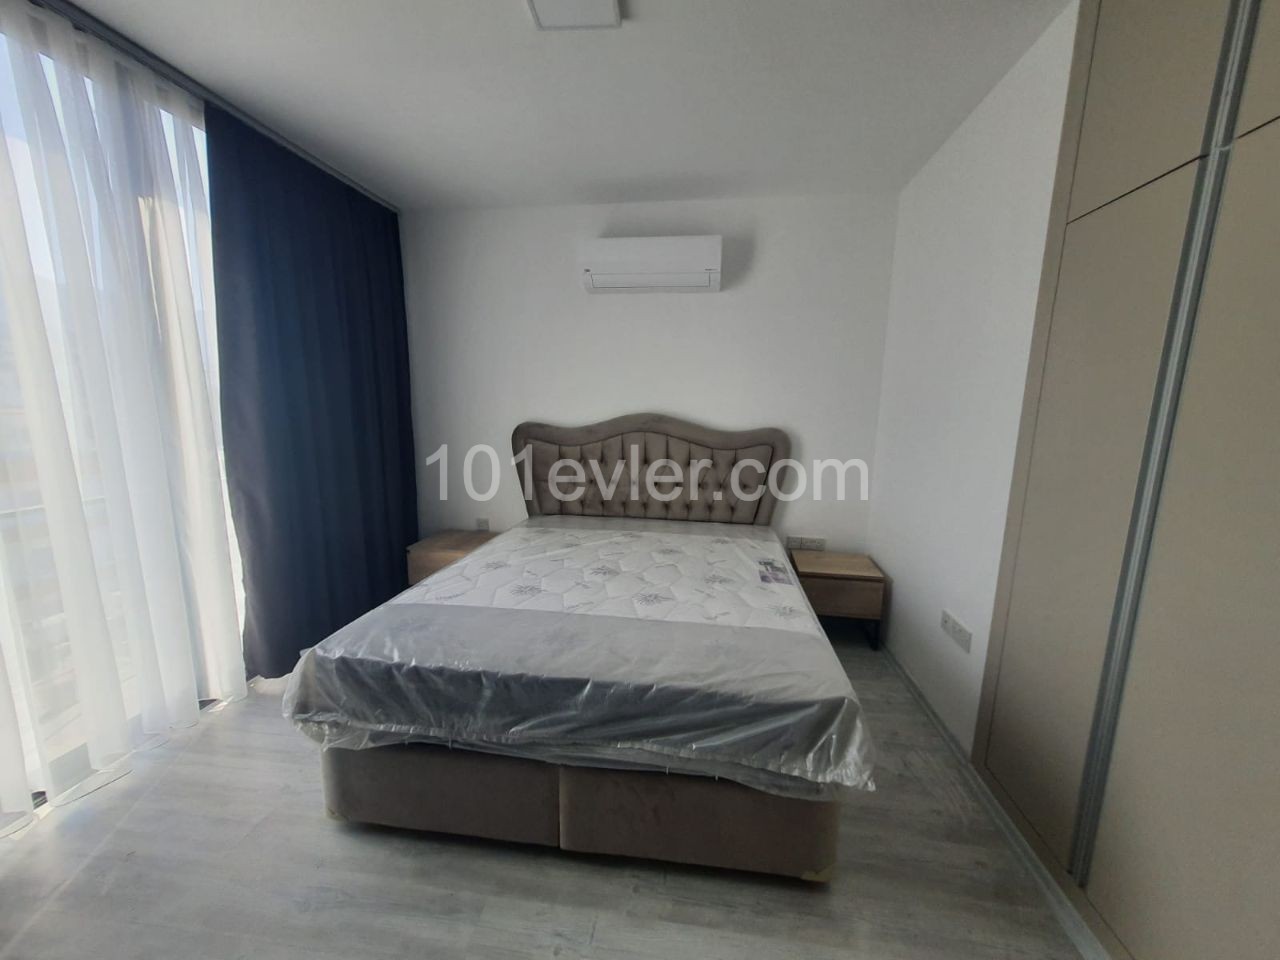 3 bedroom penthouse apartment for rent in Kyrenia Center / Dublex